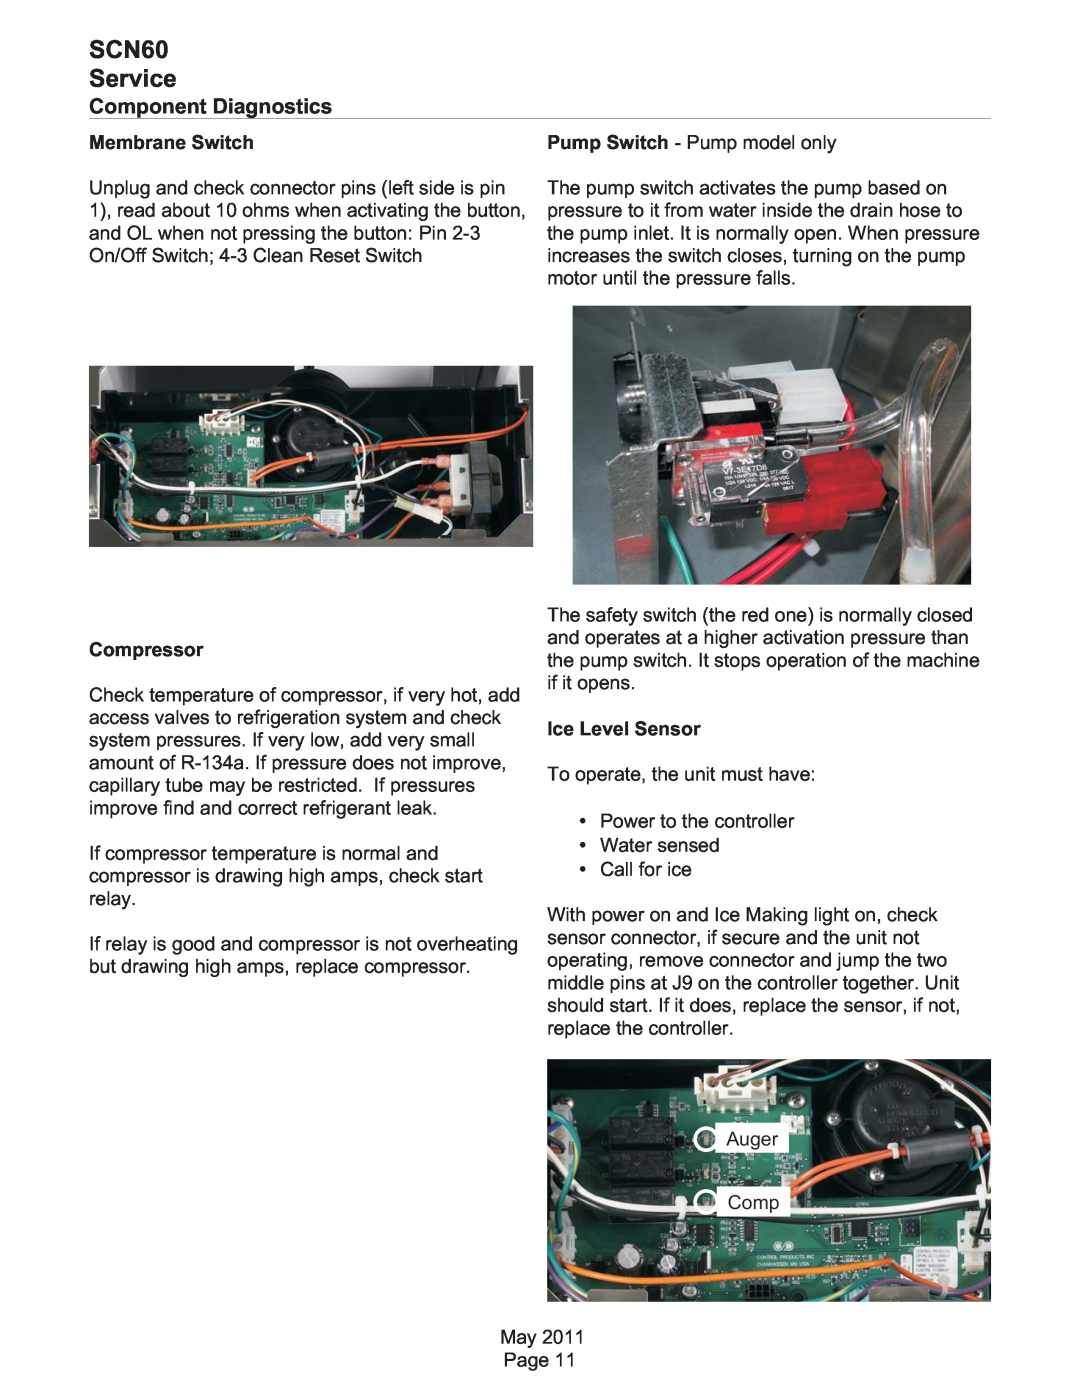 Scotsman Ice SCN60 Component Diagnostics, Membrane Switch, Pump Switch - Pump model only, Compressor, Ice Level Sensor 